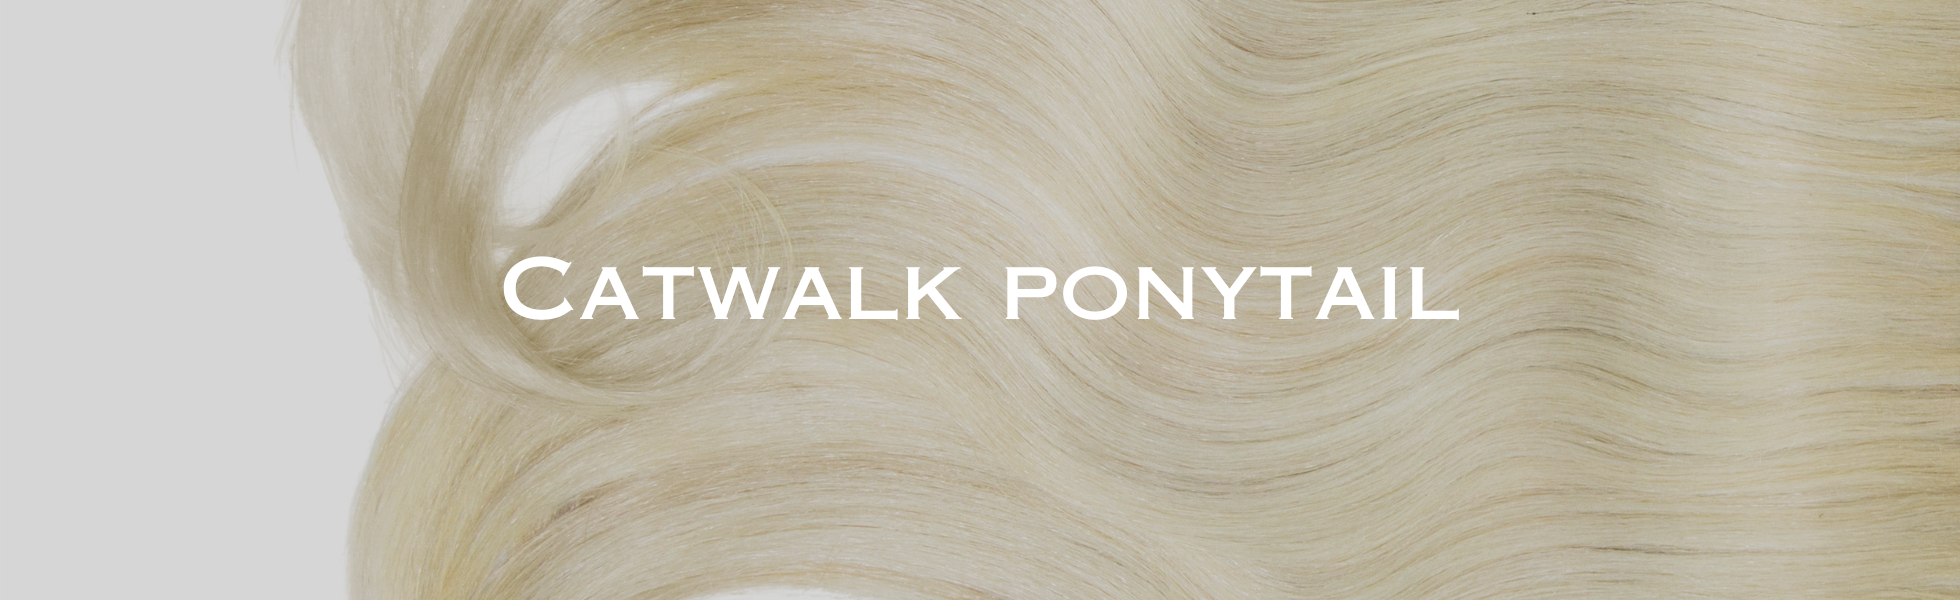 catwalk ponytail